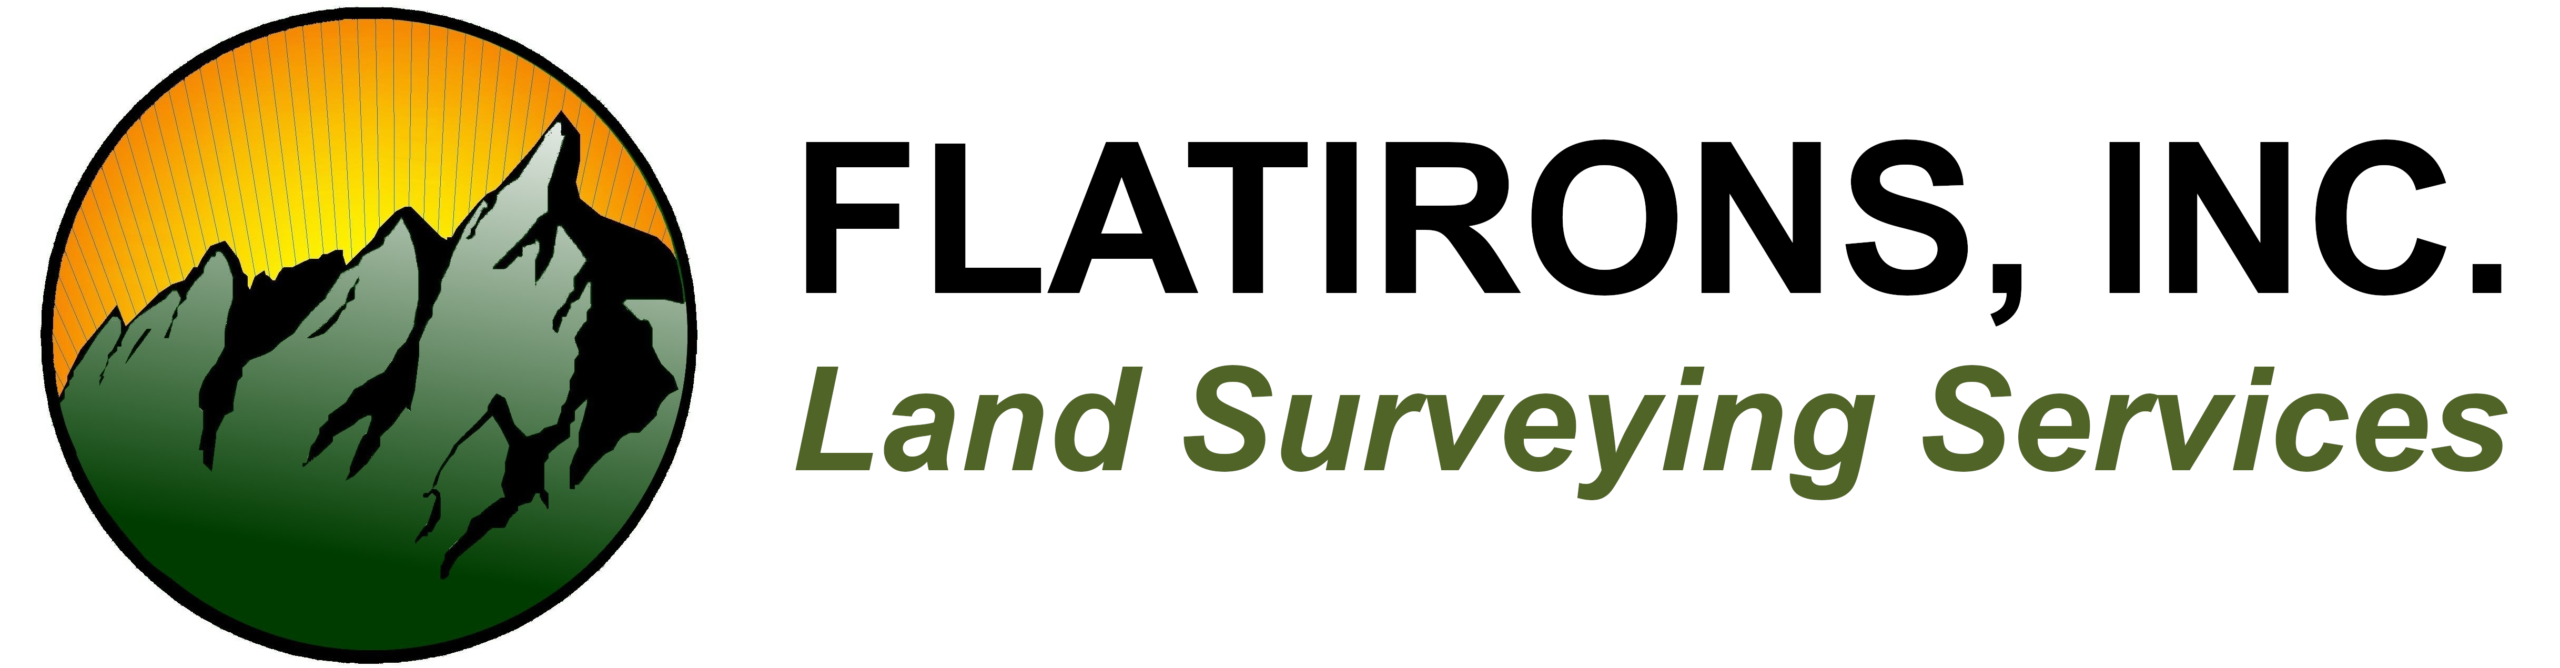 improvement-location-certificate-ilc-request-flatirons-inc-land-surveying-services